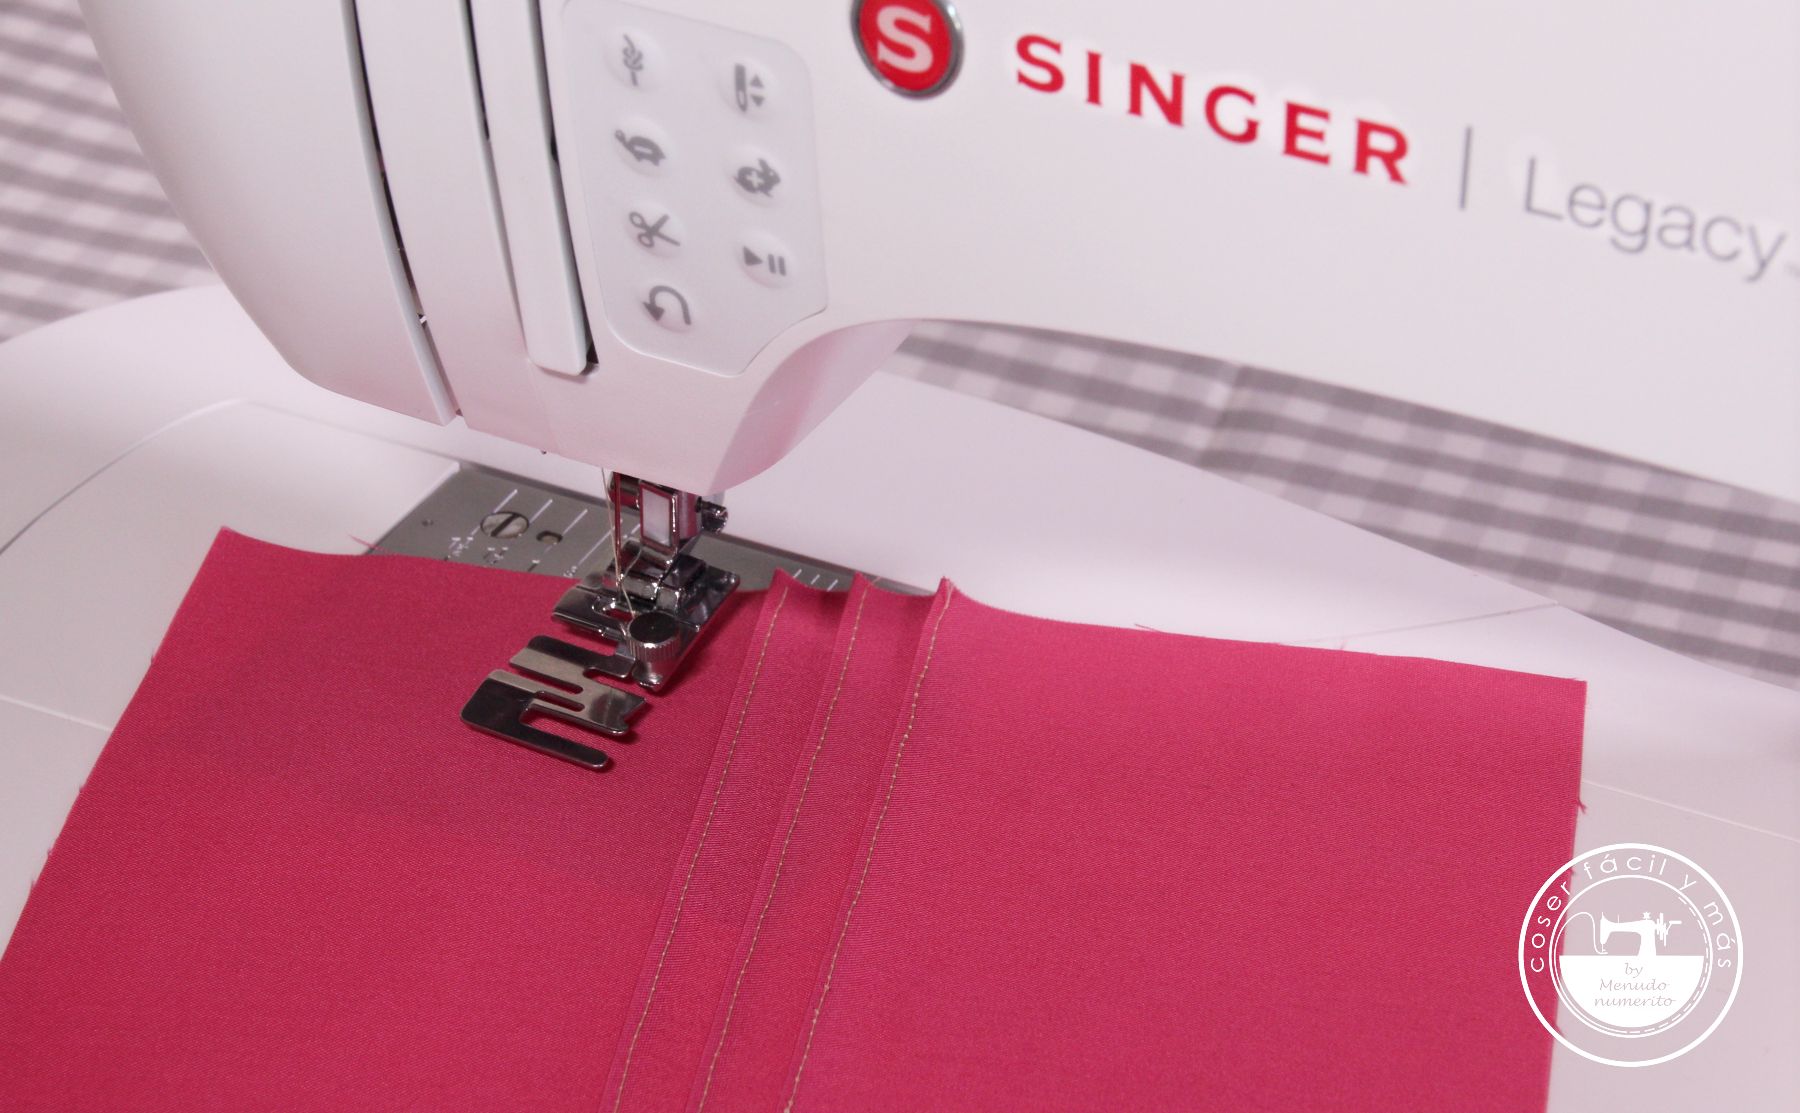 prensatelas edge stitcher alforzas coser facil blogs de costura